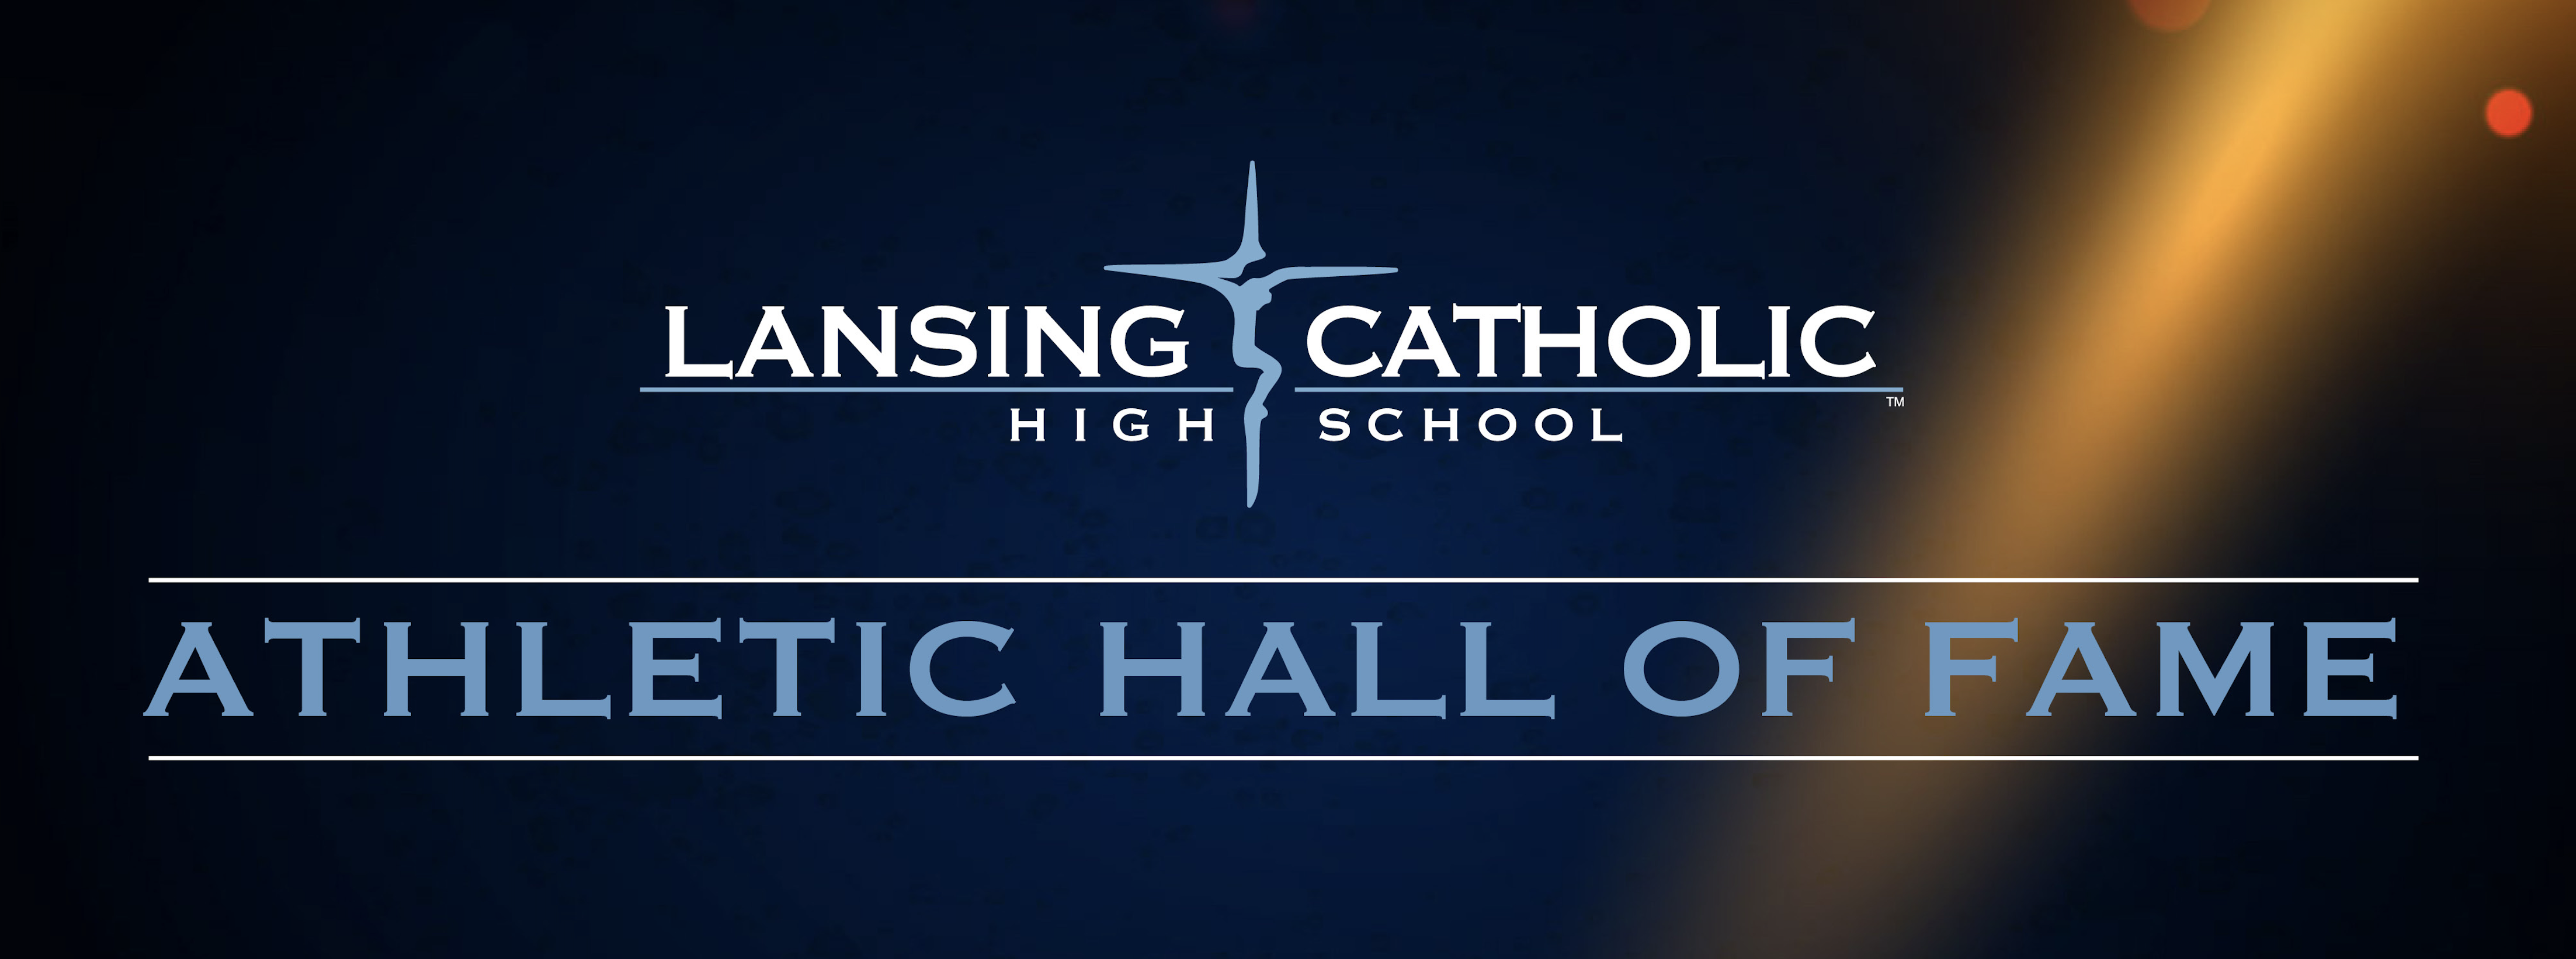 Lansing Catholic High School Athletic Hall of Fame